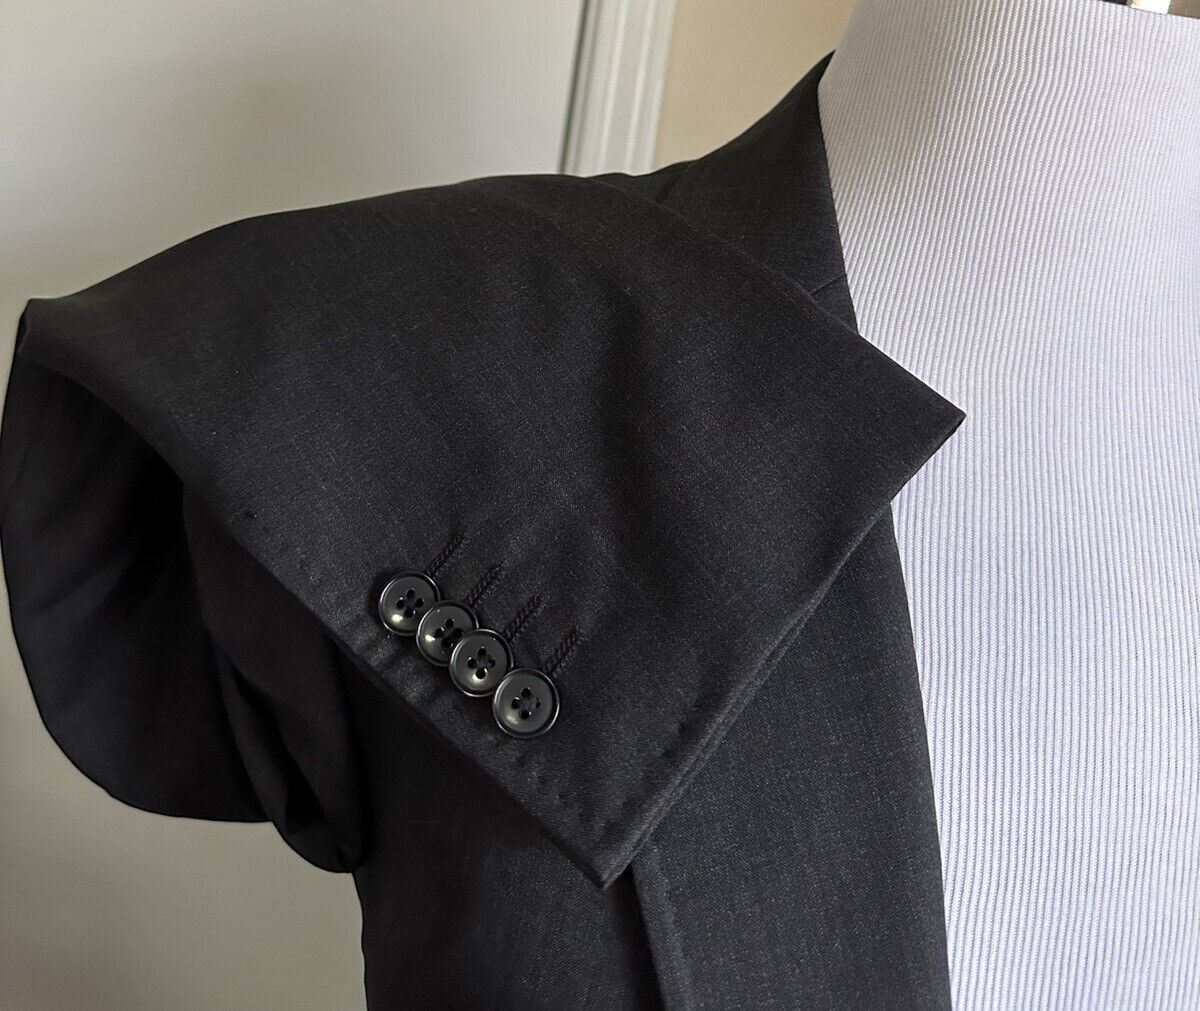 New $3850 Dolce&Gabbana Men’s Suit Dark Gray 44L US ( 56L Eu ) Italy